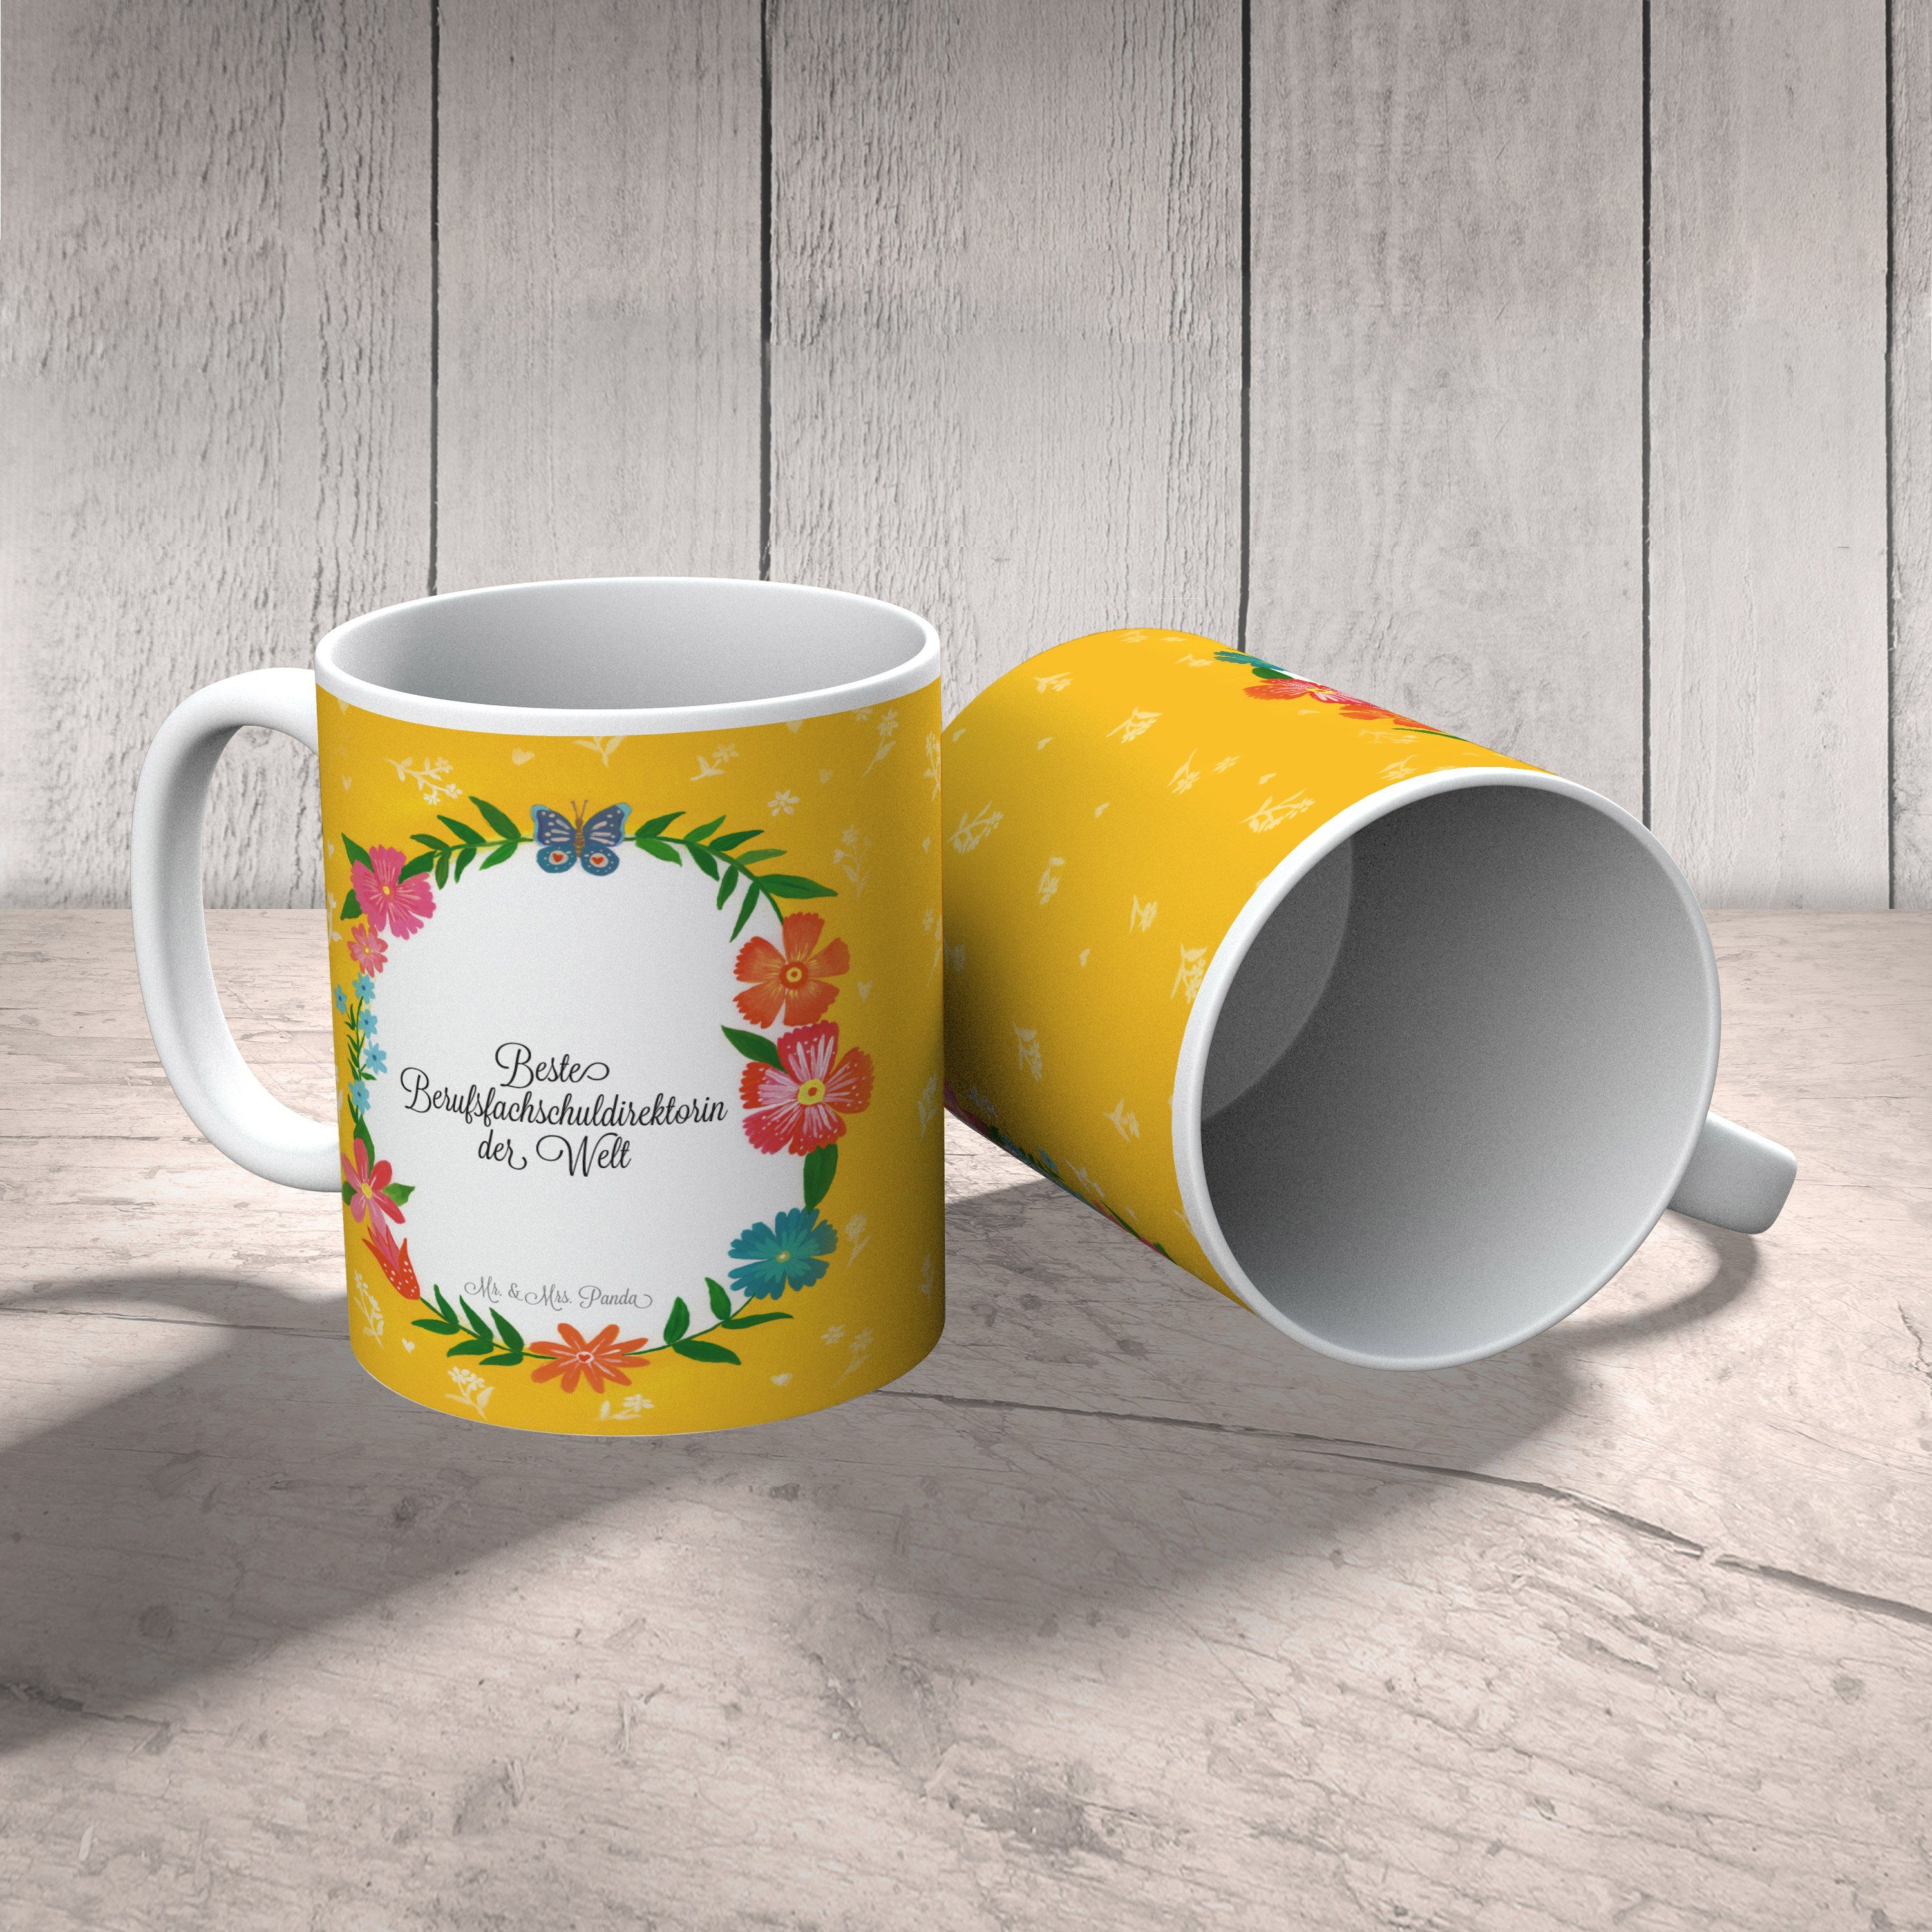 Tas, - Keramik Geschenk, Tasse Mr. Berufsfachschuldirektorin Teetasse, Gratulation, Büro Mrs. & Panda